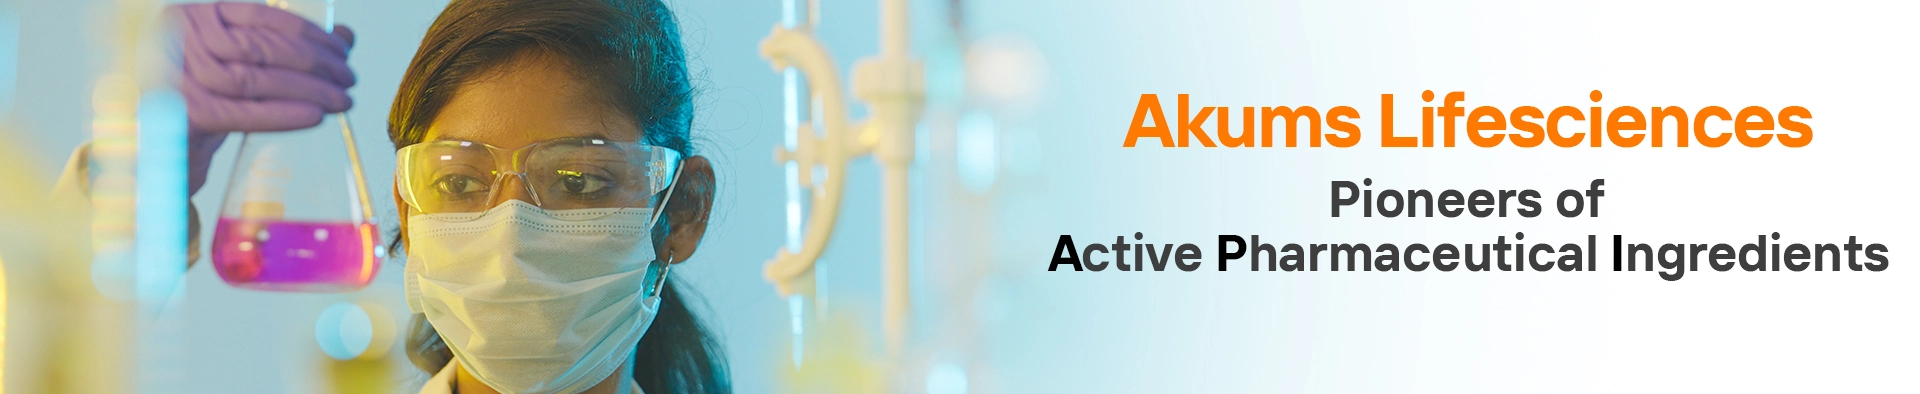 API Manufacturer in India |Active Pharmaceutical Ingredients|Akums